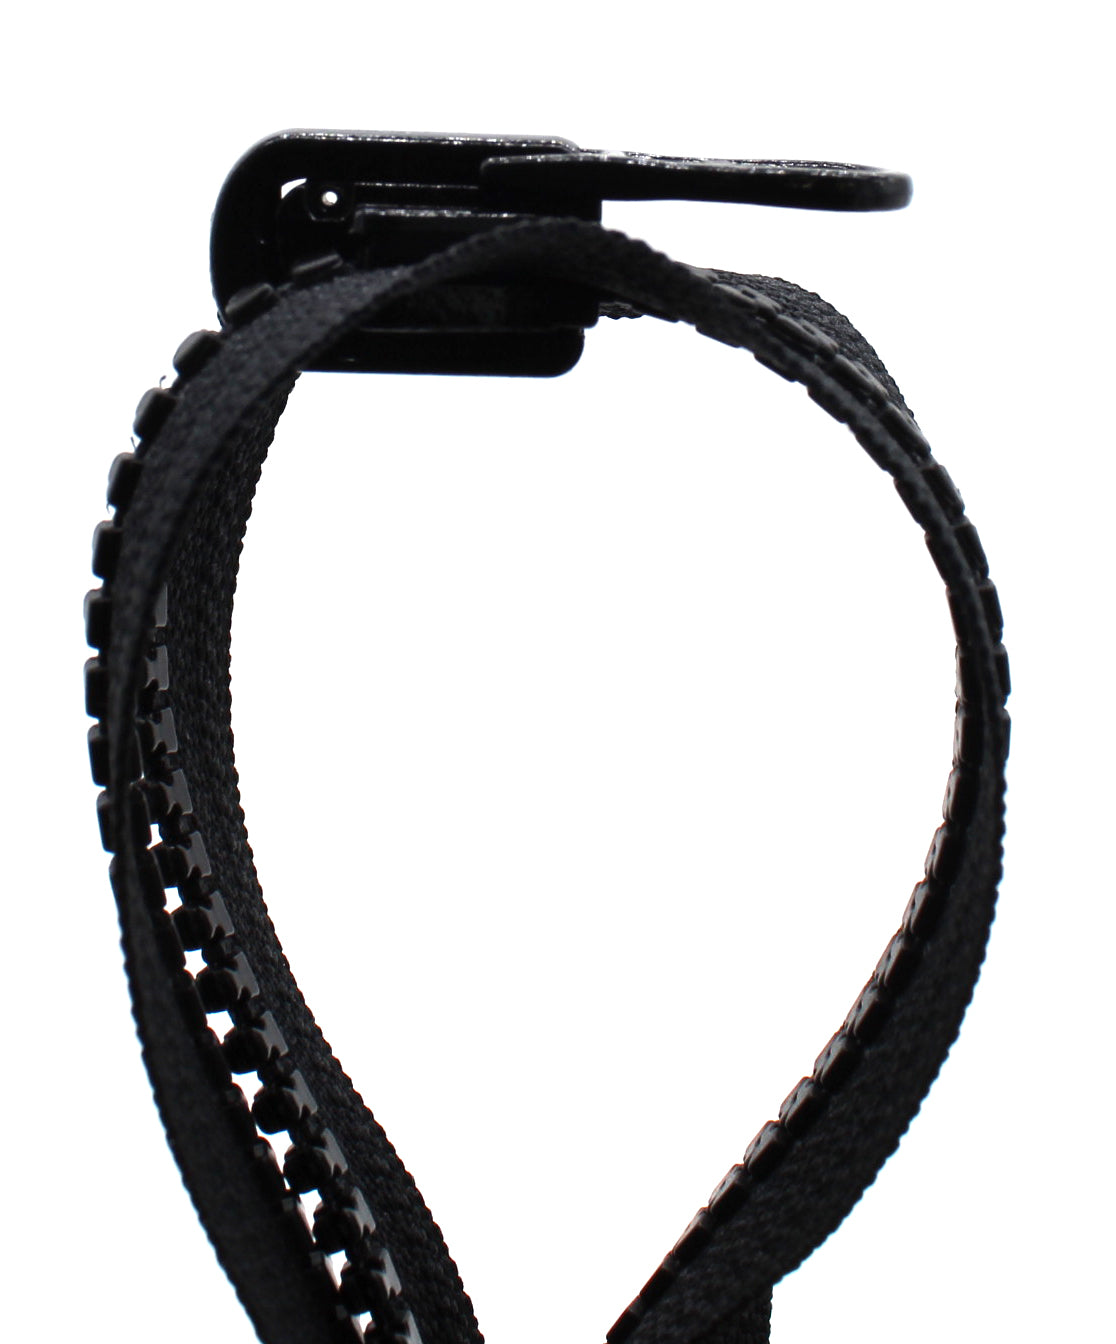 Lenzip #8 Separating Zipper - Vislon - LIFETIME GUARANTEE